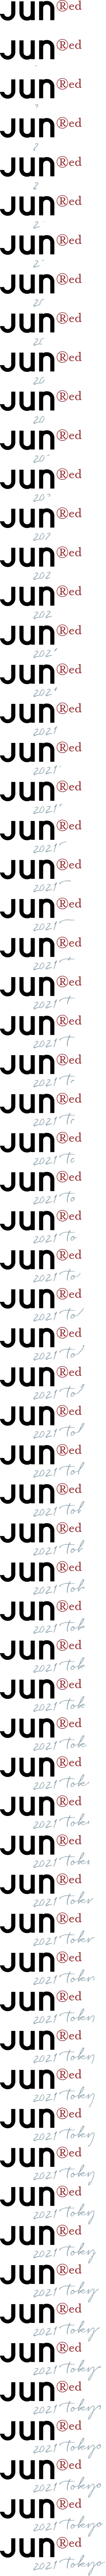 JunRed 2021Tokyo